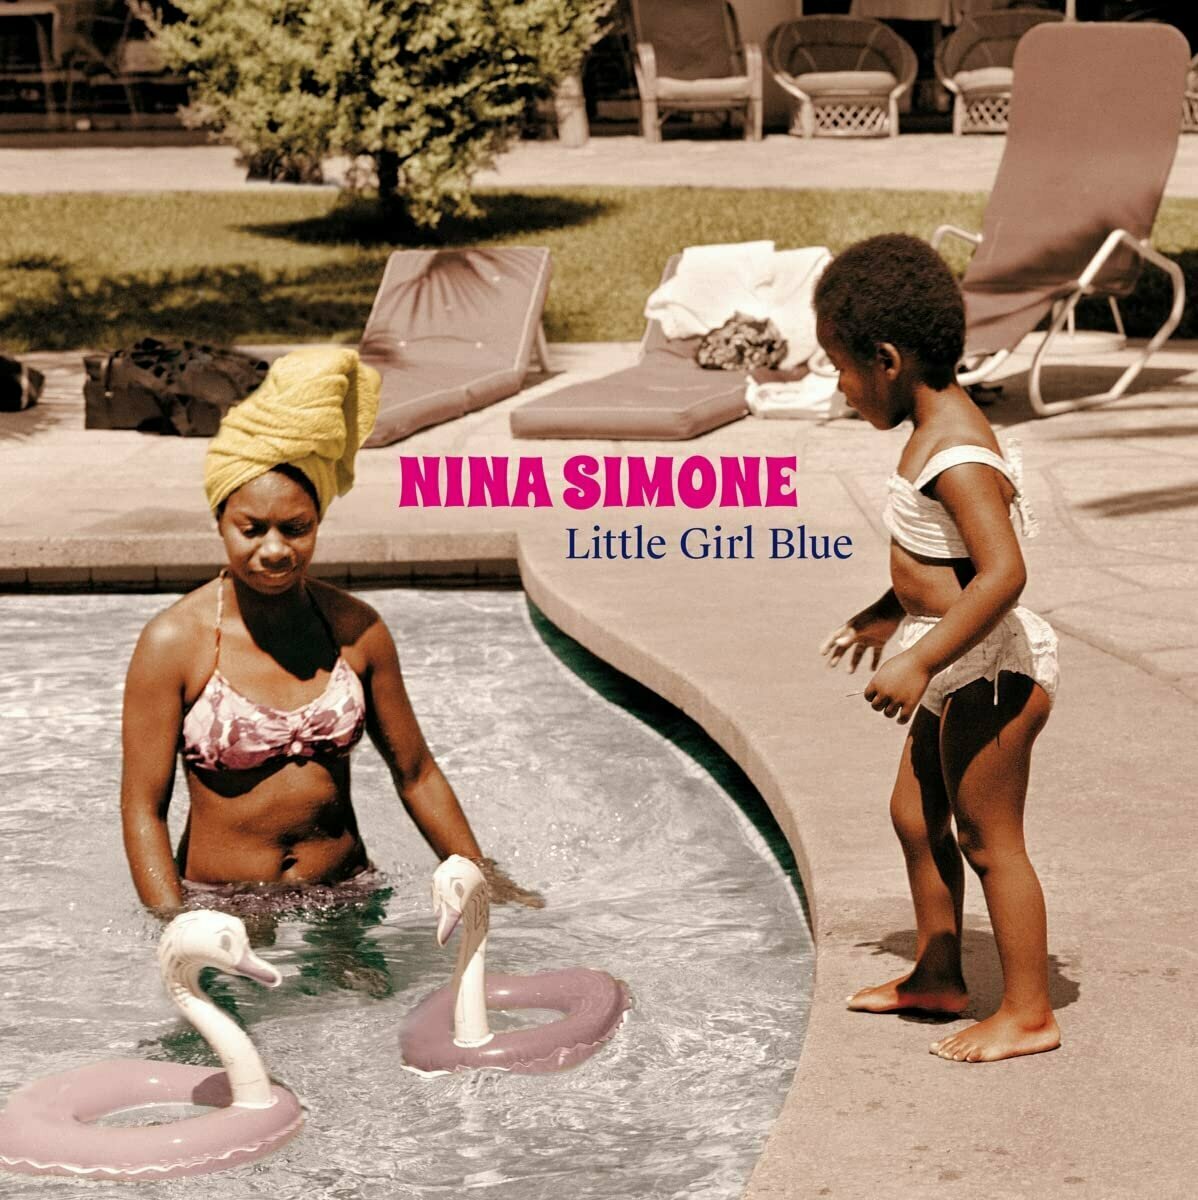 Simone Nina "Виниловая пластинка Simone Nina Little Girl Blue"